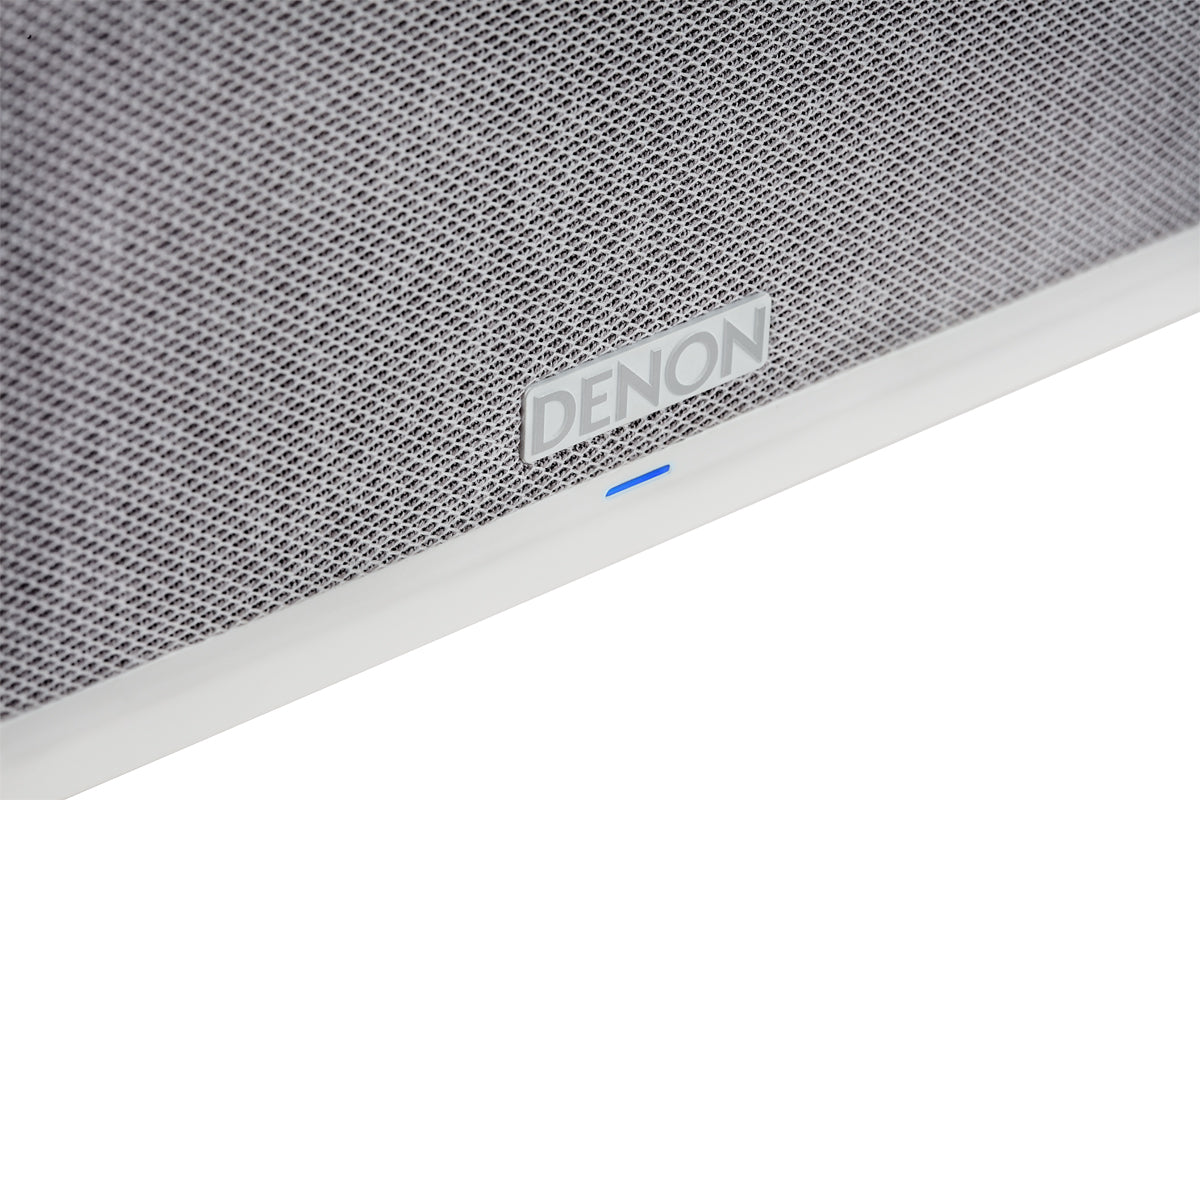 Denon Home 250 Wireless Speaker - White - The Audio Experts